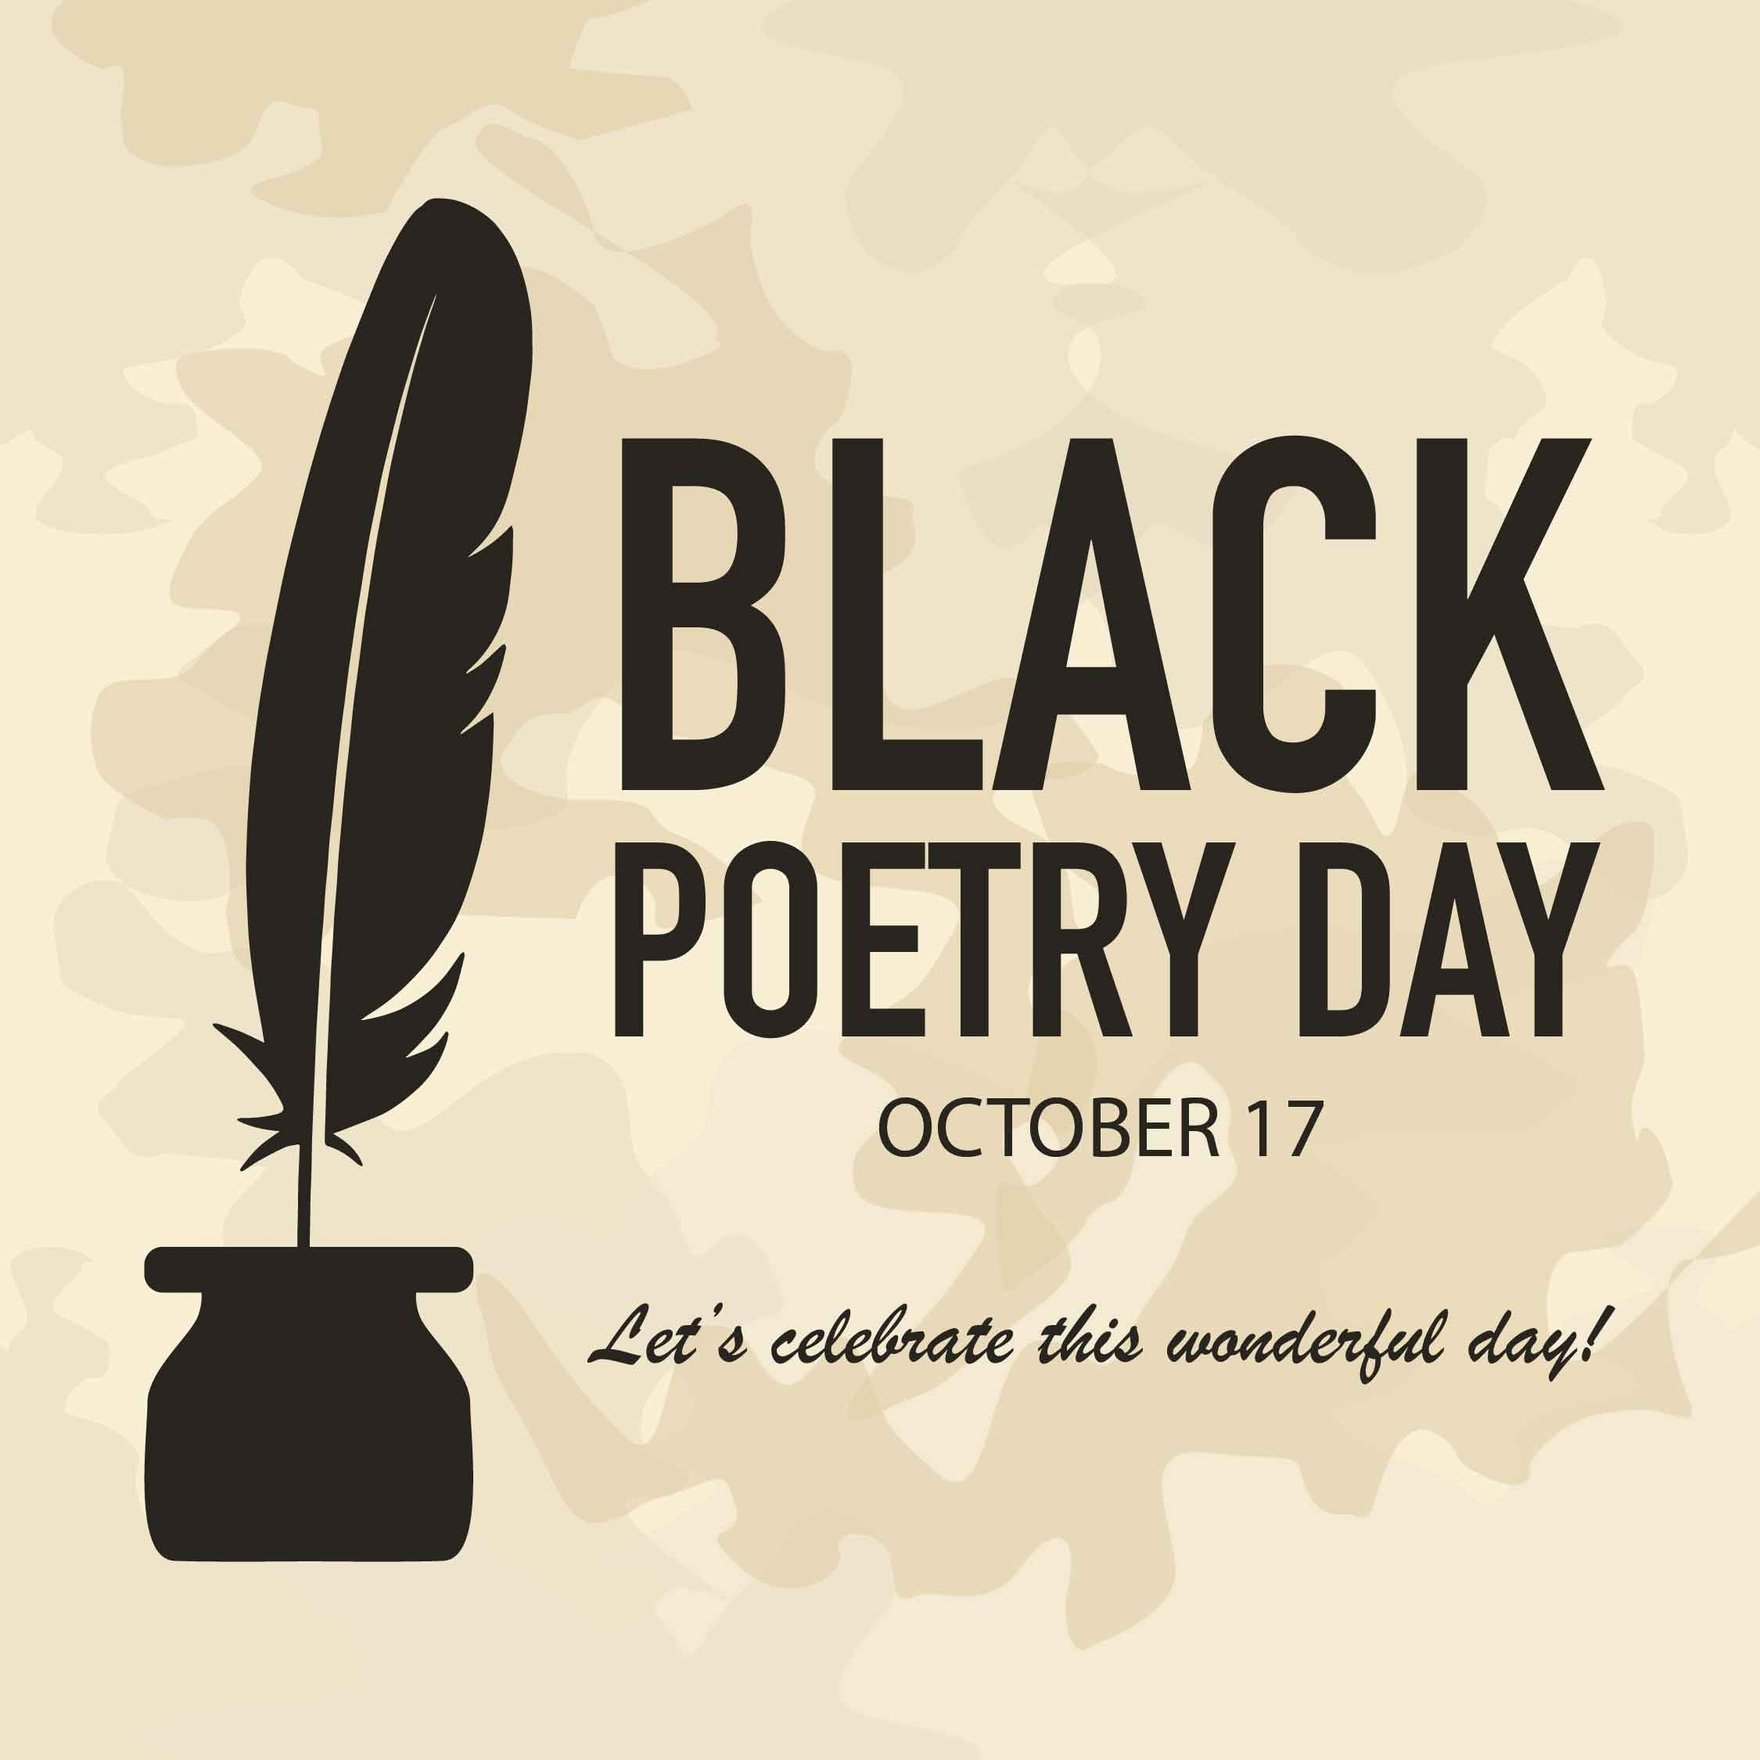 Black Poetry Day Instagram Post in Illustrator, PSD, EPS, SVG, JPG, PNG